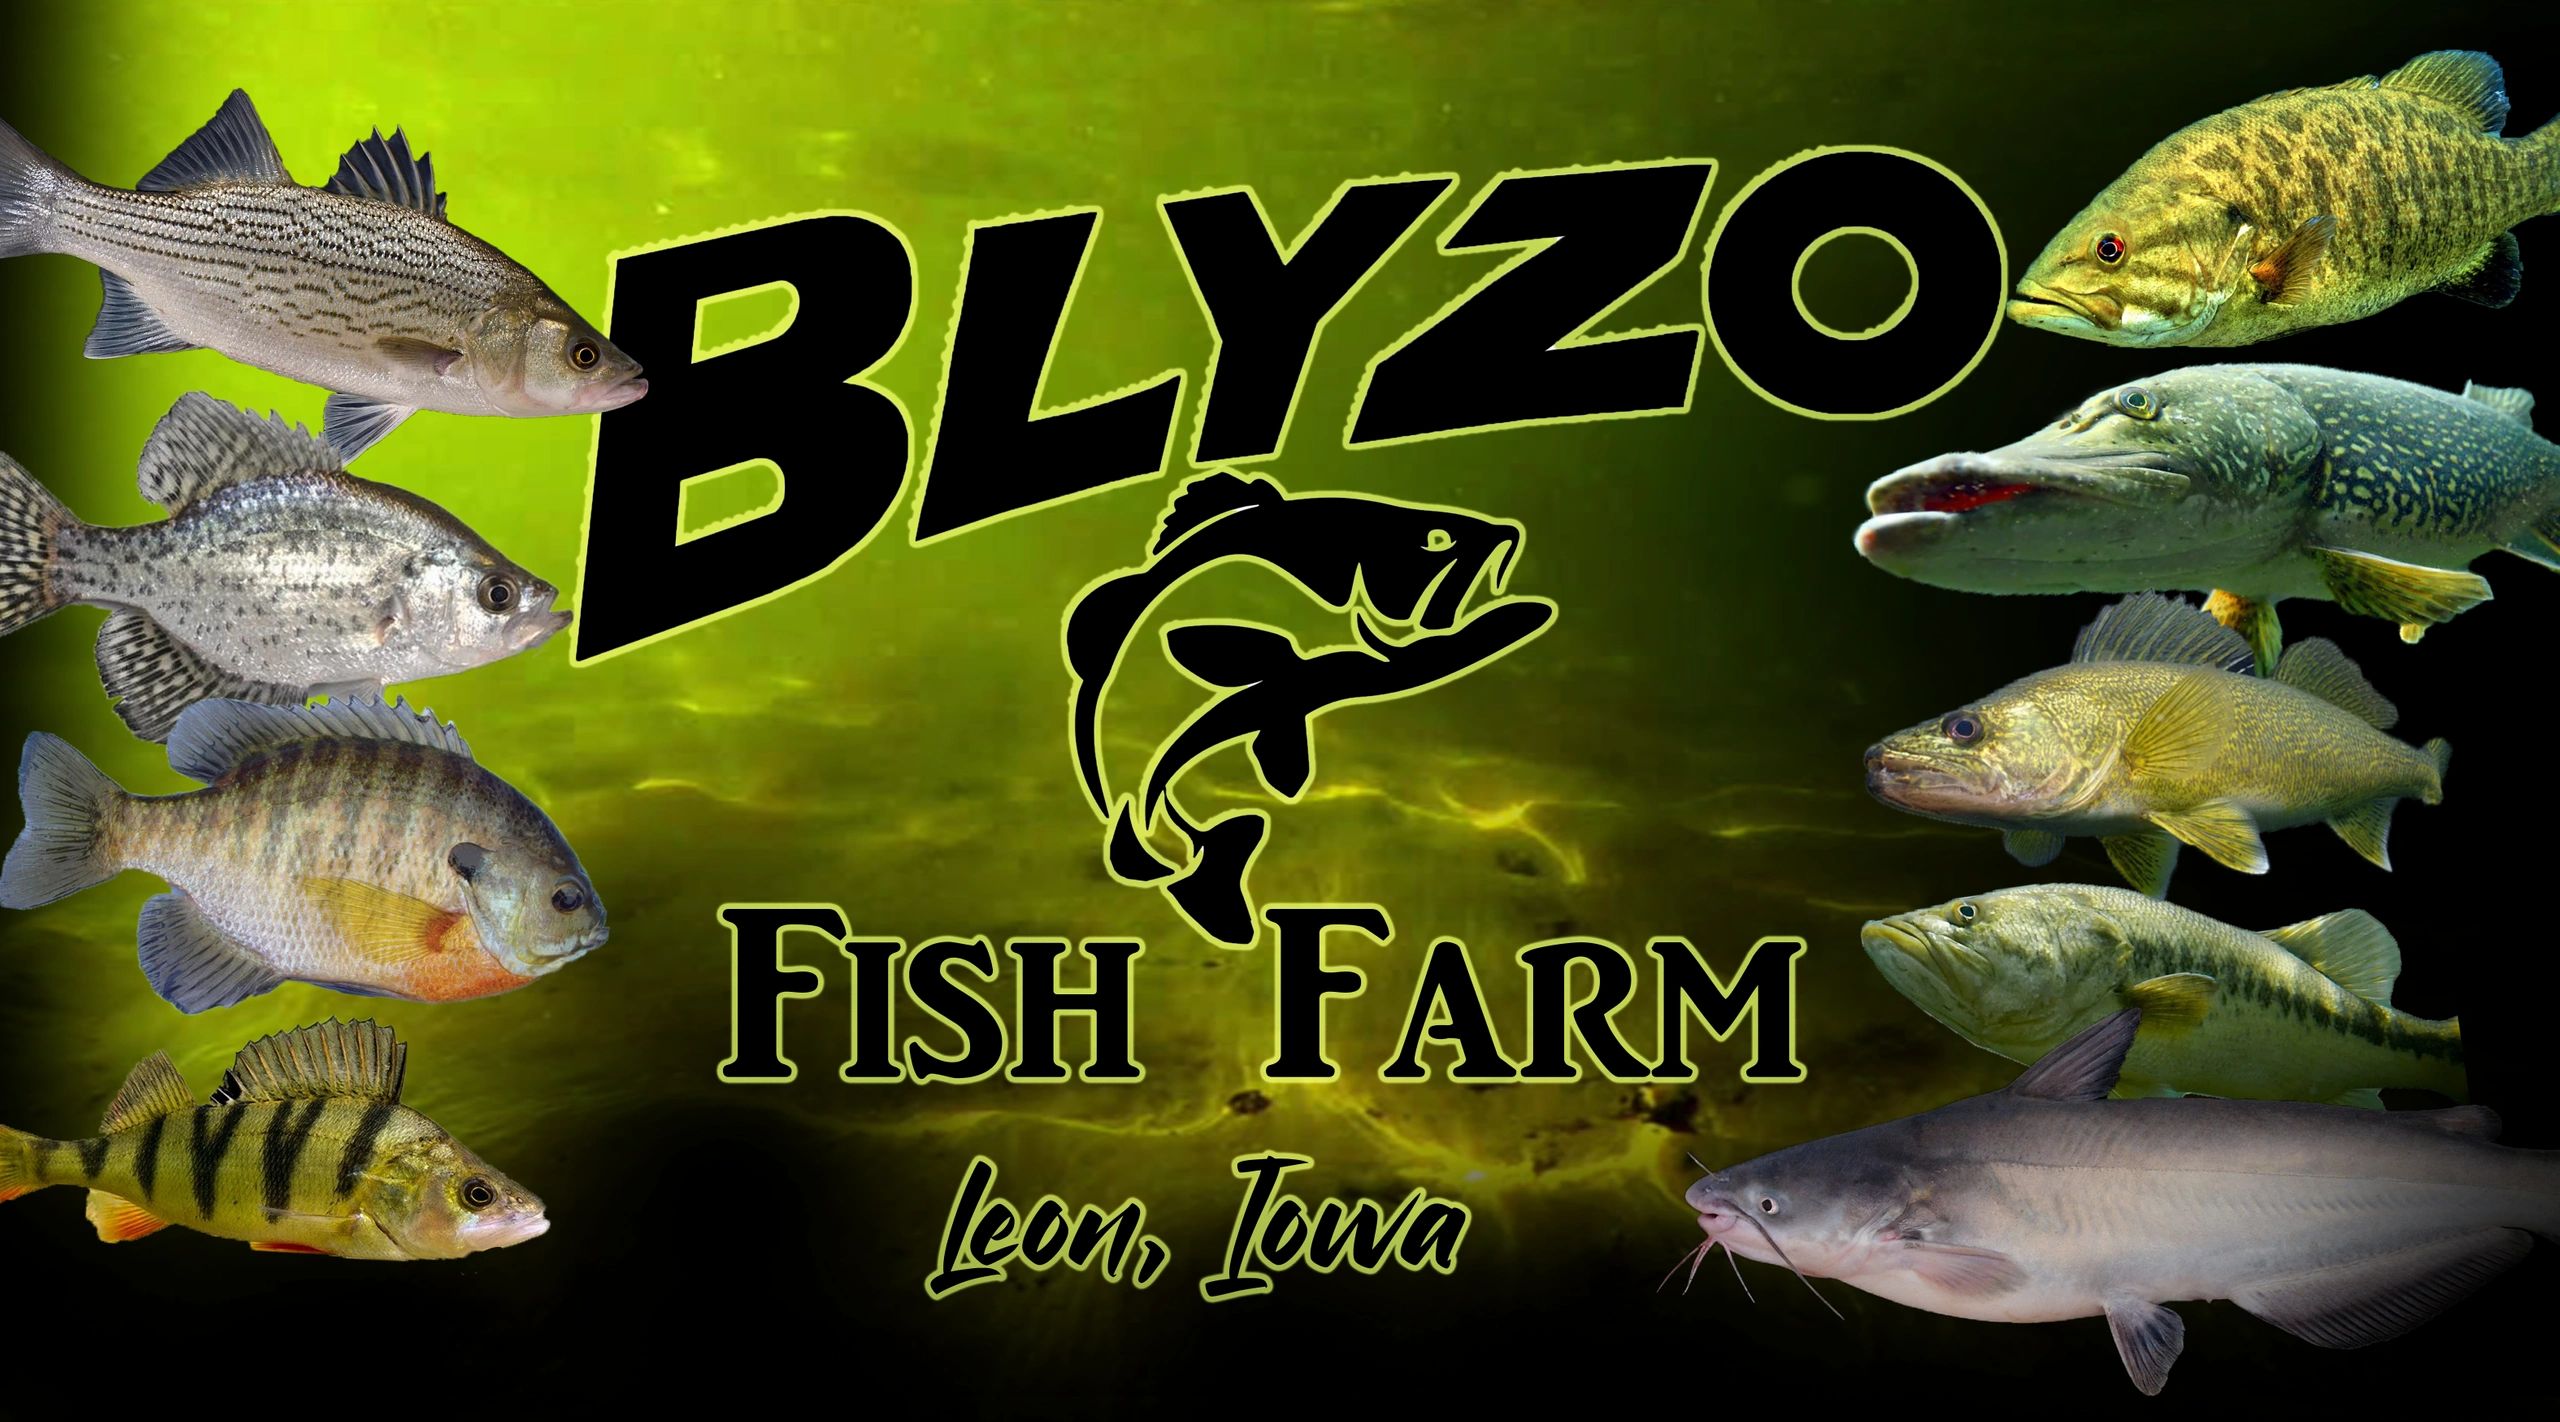 BLYZO FISH FARM - Pond Stocking, Fish Hatchery, Fish Farm